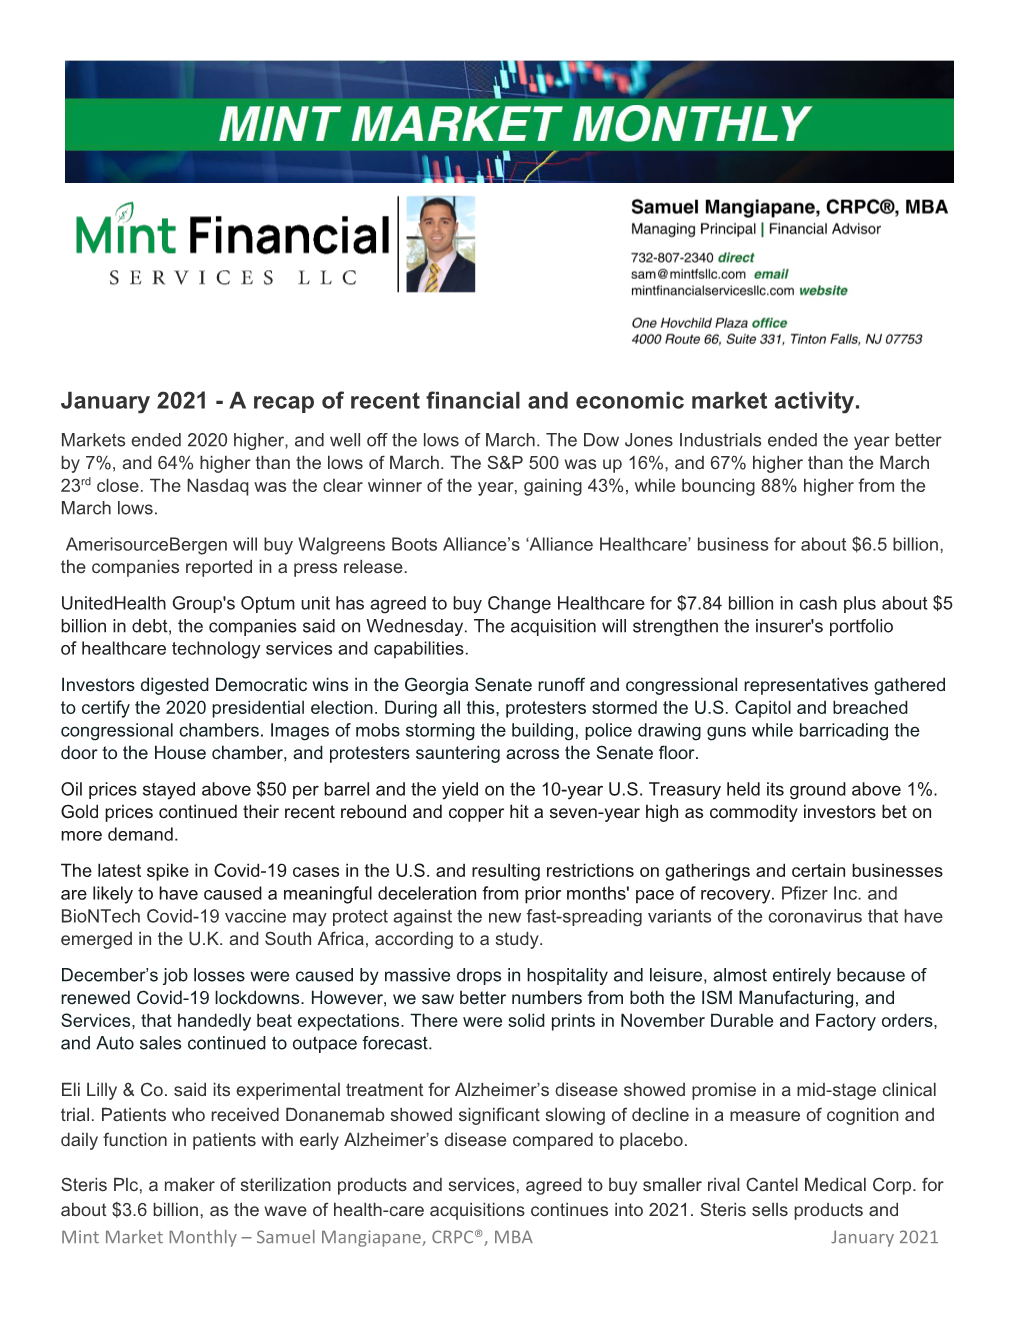 January 2021 - a Recap of Recent Financial and Economic Market Activity